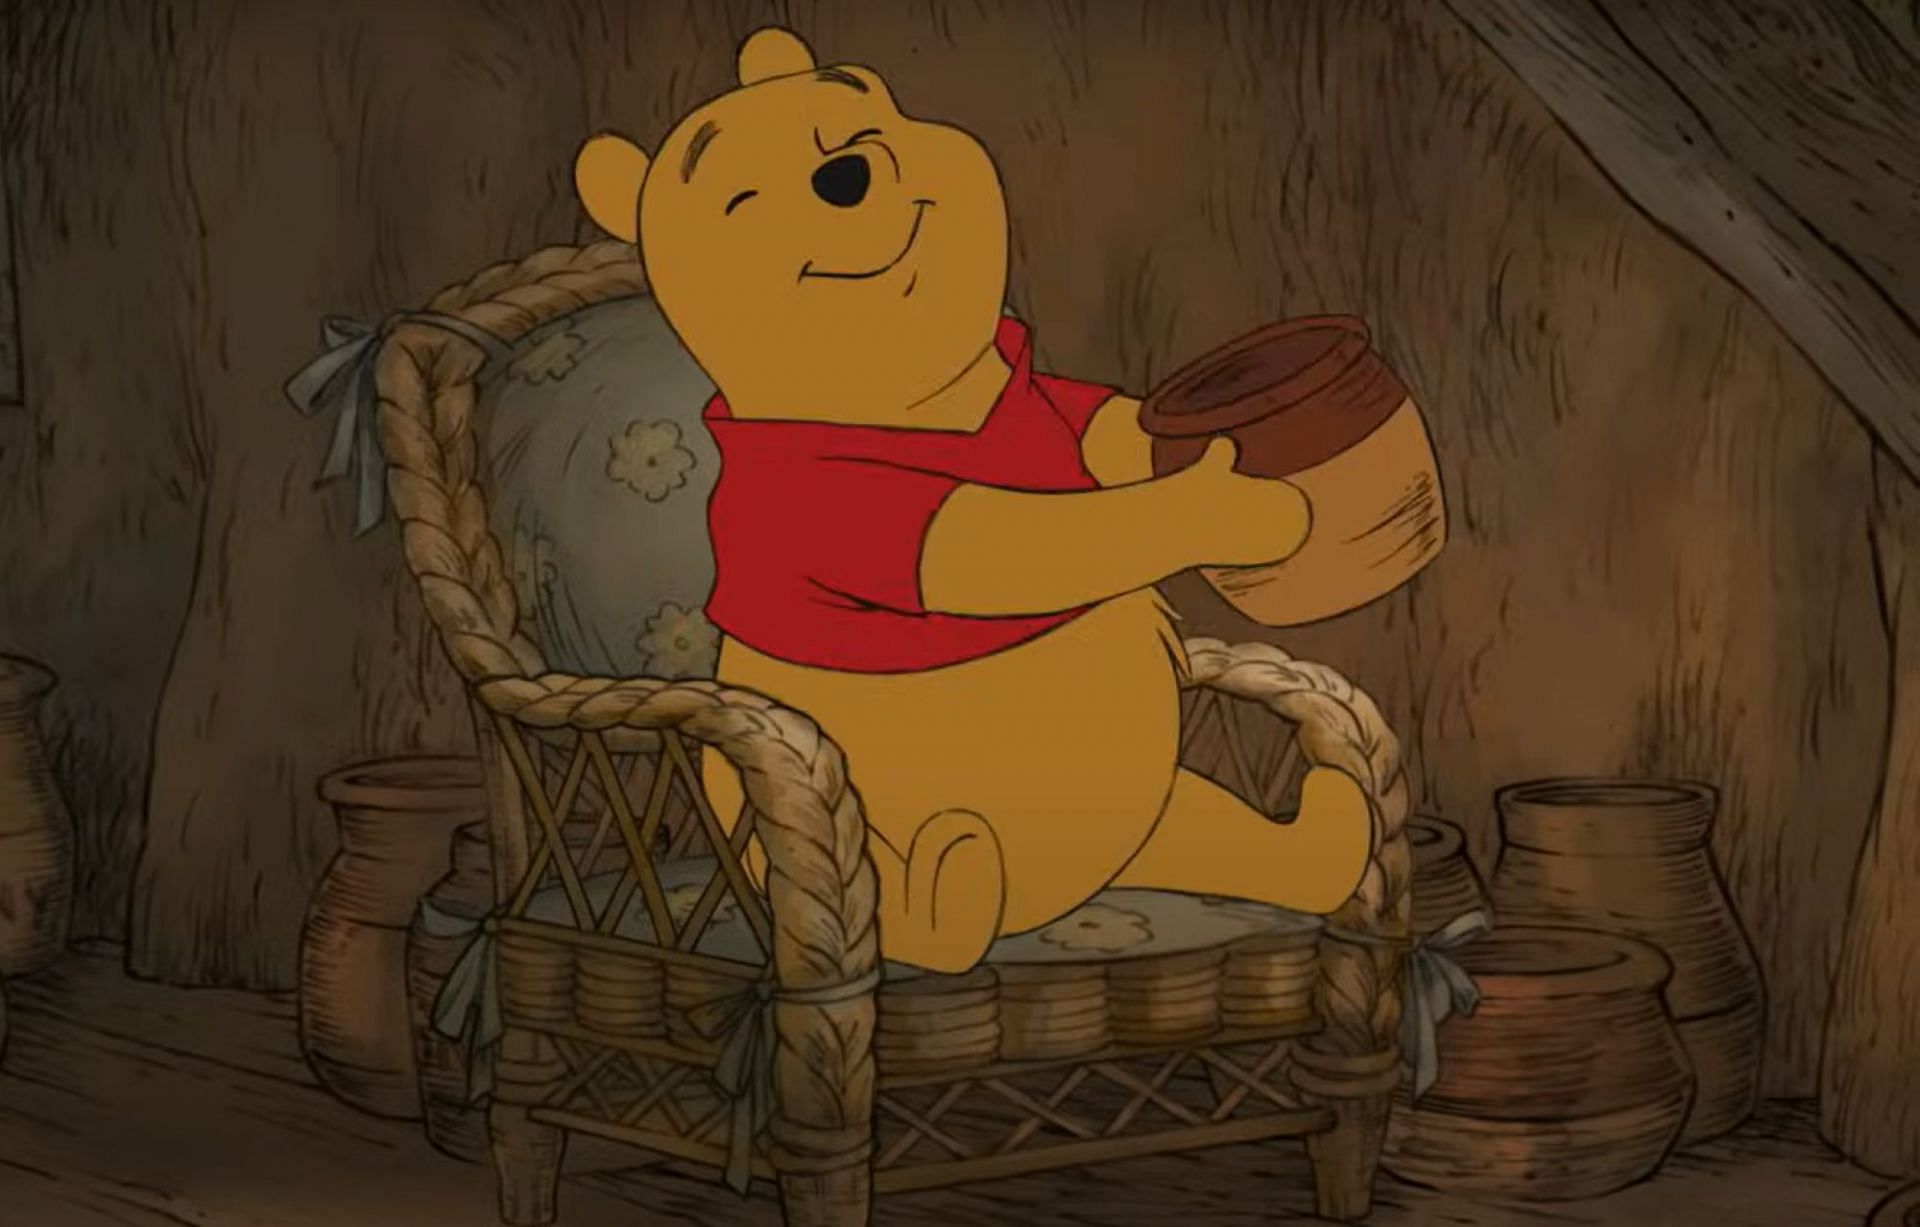 Winnie The Pooh crockpot takes social media by storm (Image via Disney/YouTube)